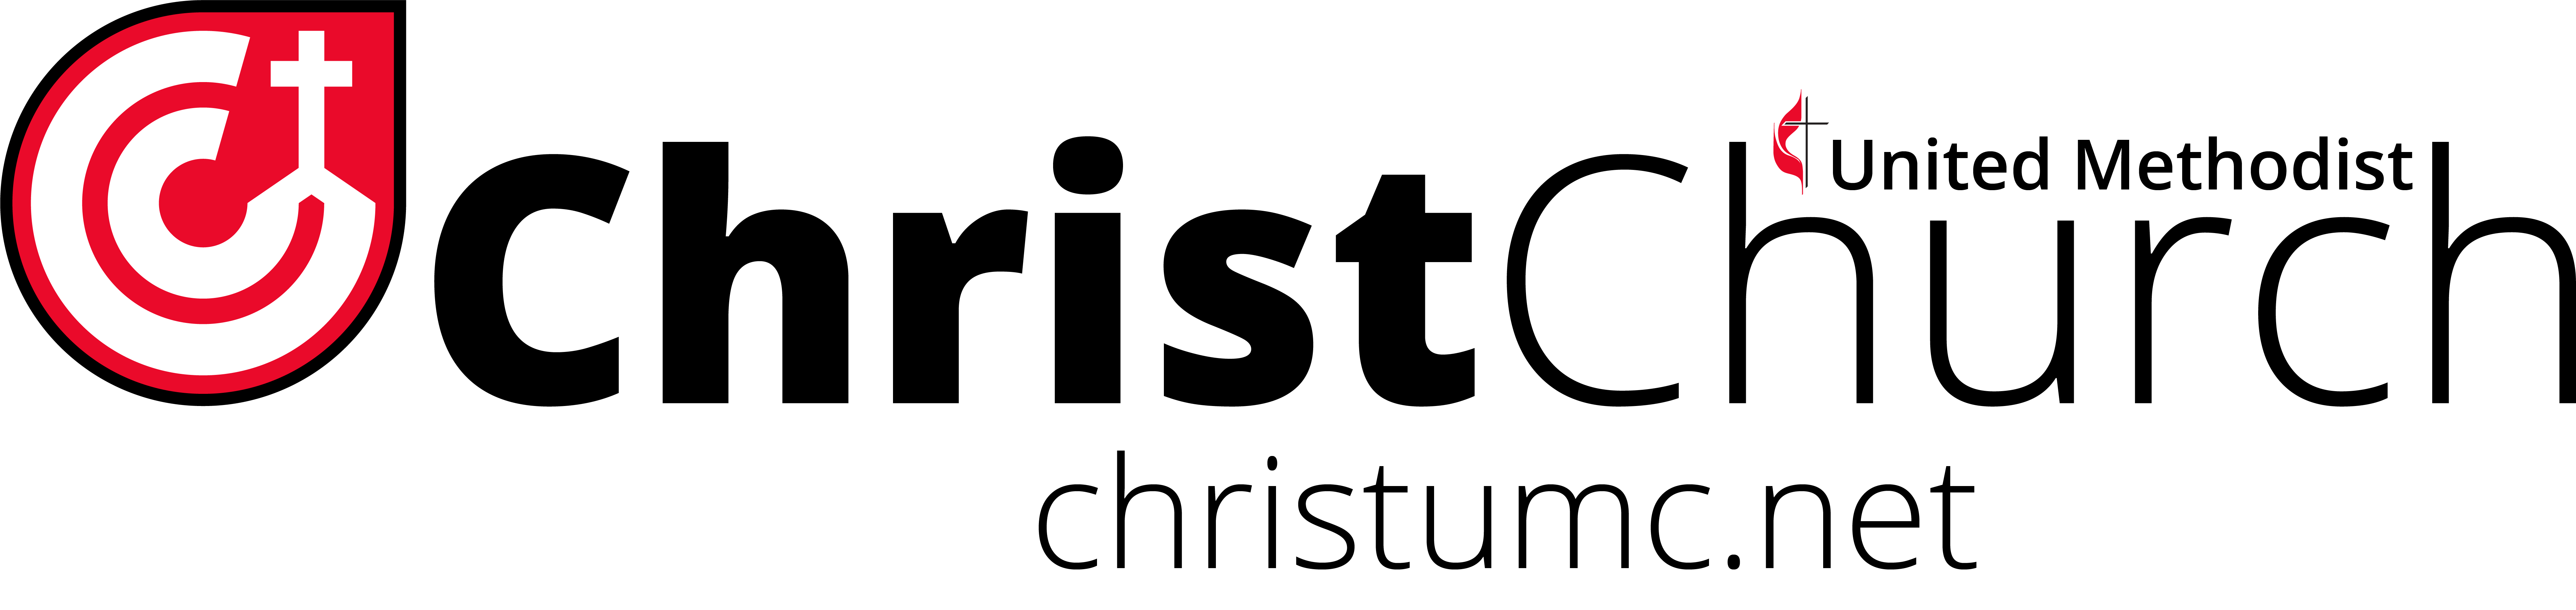 Christ Church logo with website